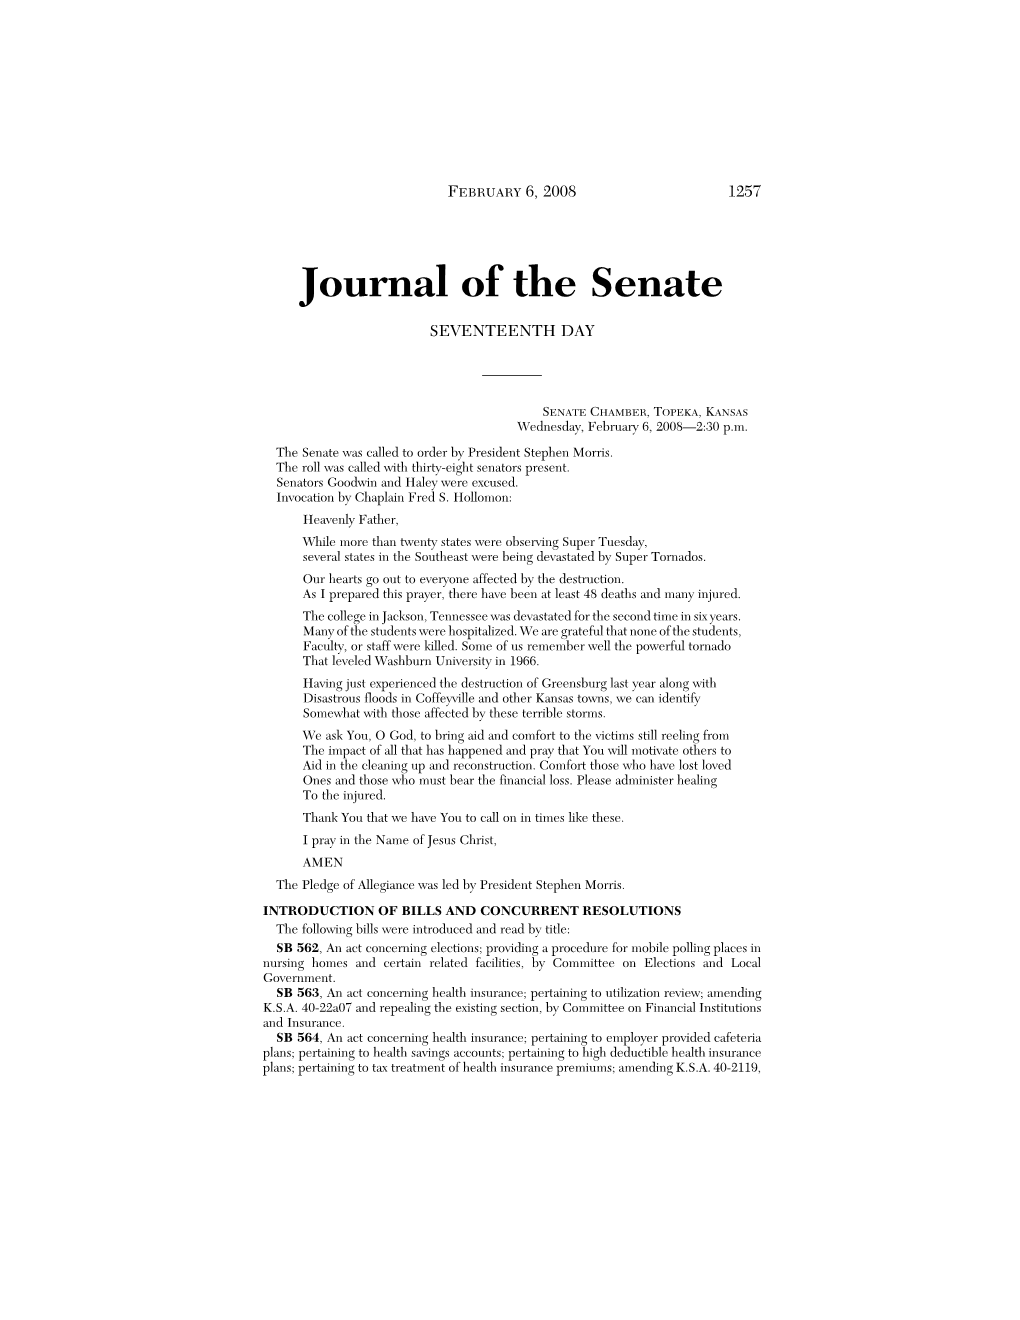 Journal of the Senate SEVENTEENTH DAY